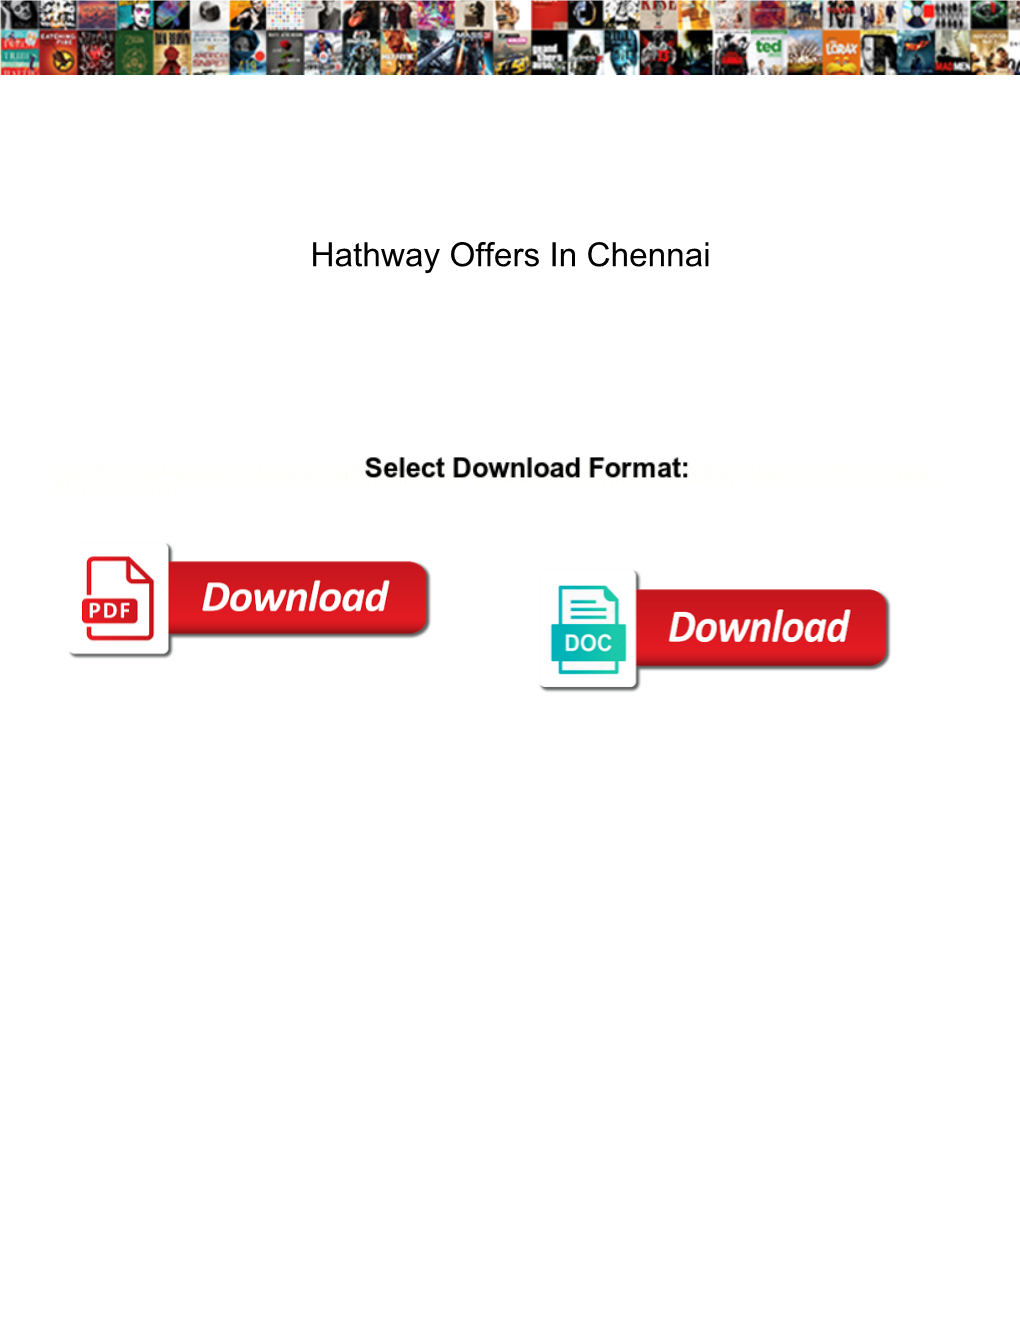 Hathway Offers in Chennai